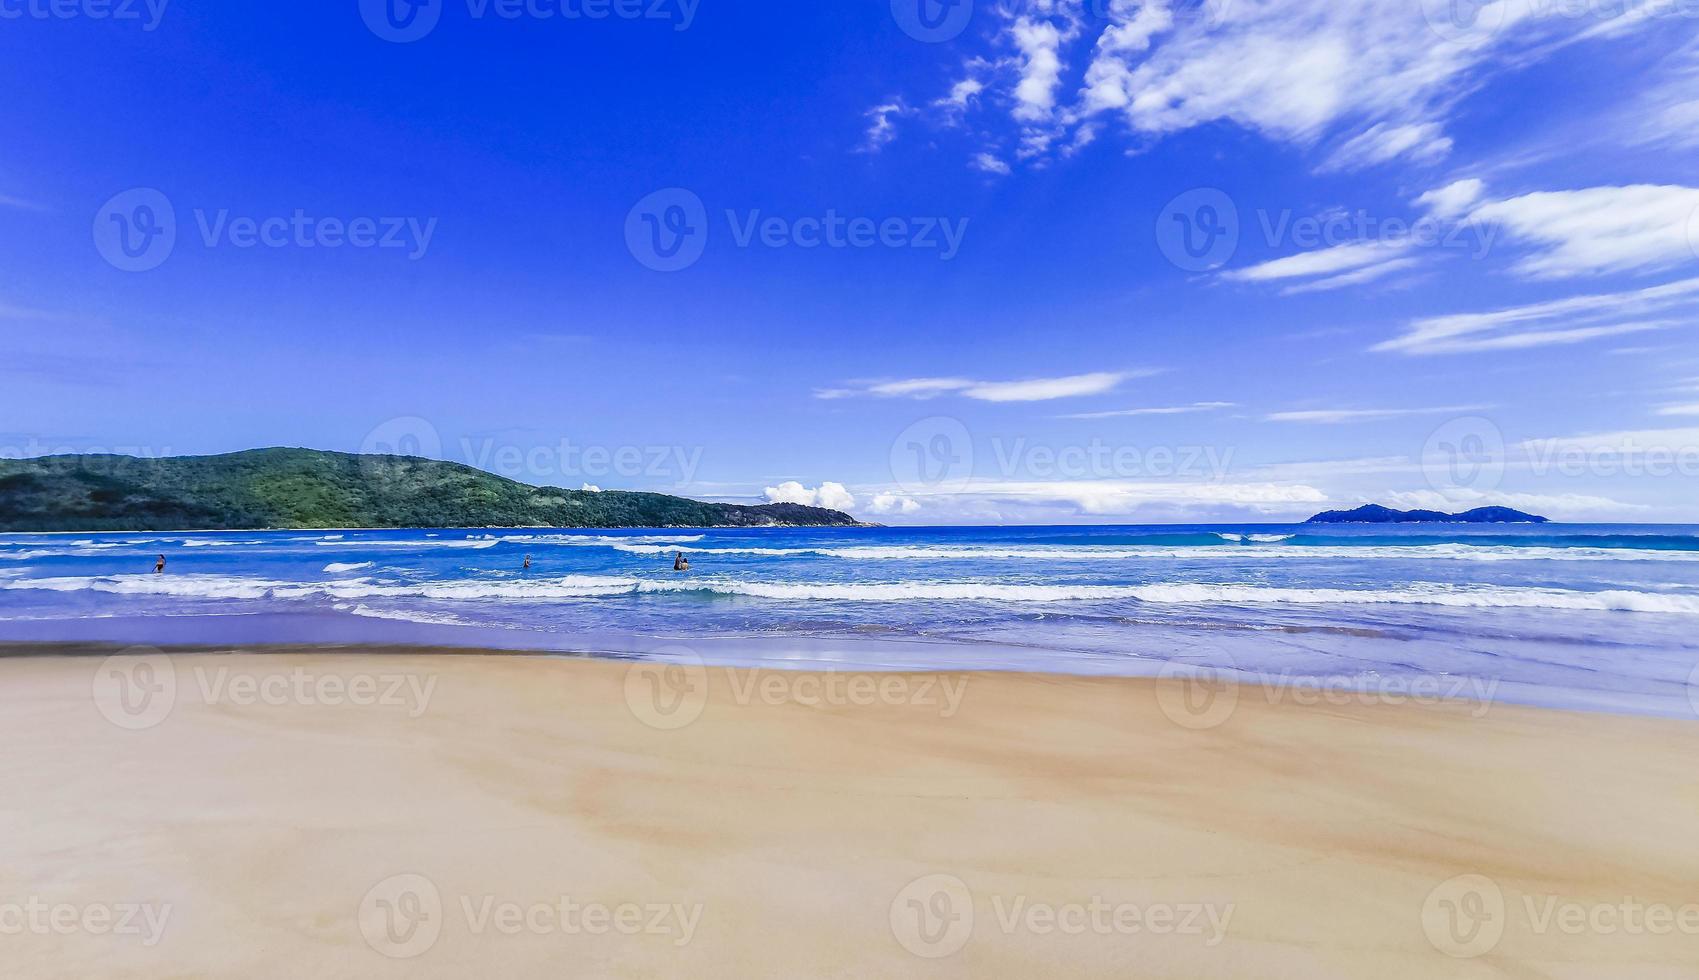 praia lopes mendes strand op het tropische eiland ilha grande brazilië. foto